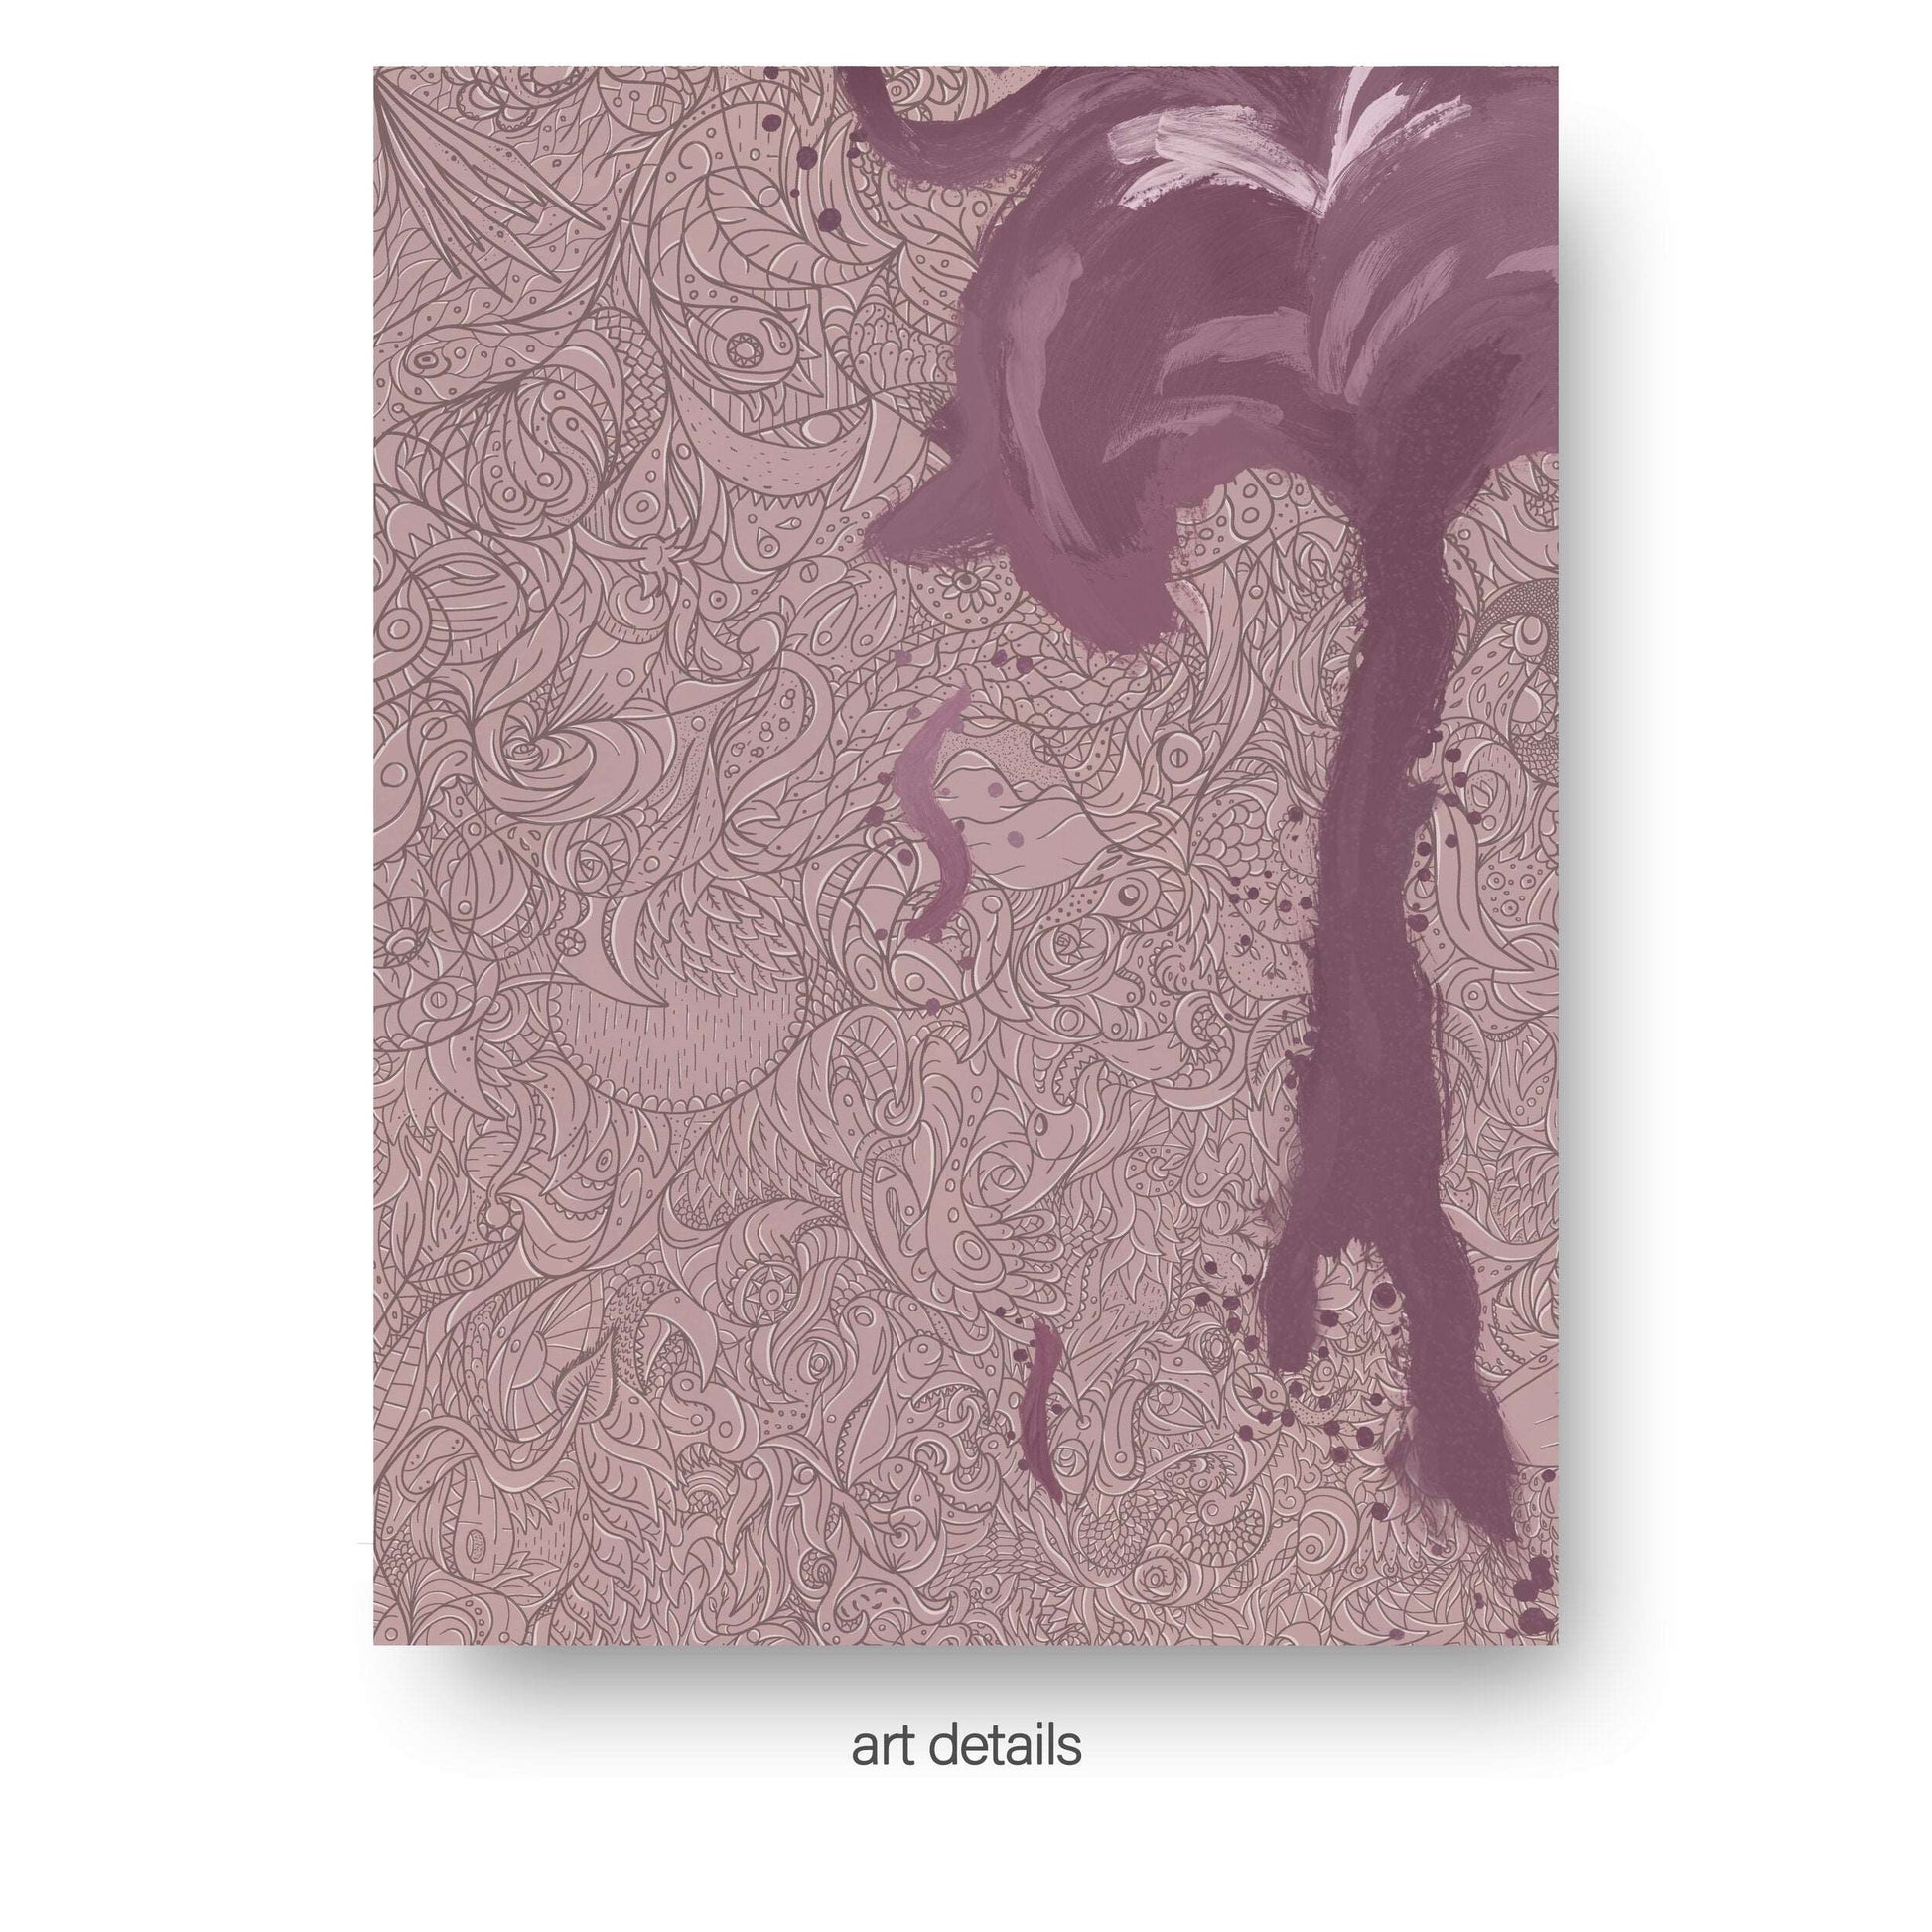 NOKUKO - Art - Alan Pedersen - ALANTHEROCK - Recognition - Listen to myself - limited edition - Purple reflection - art details